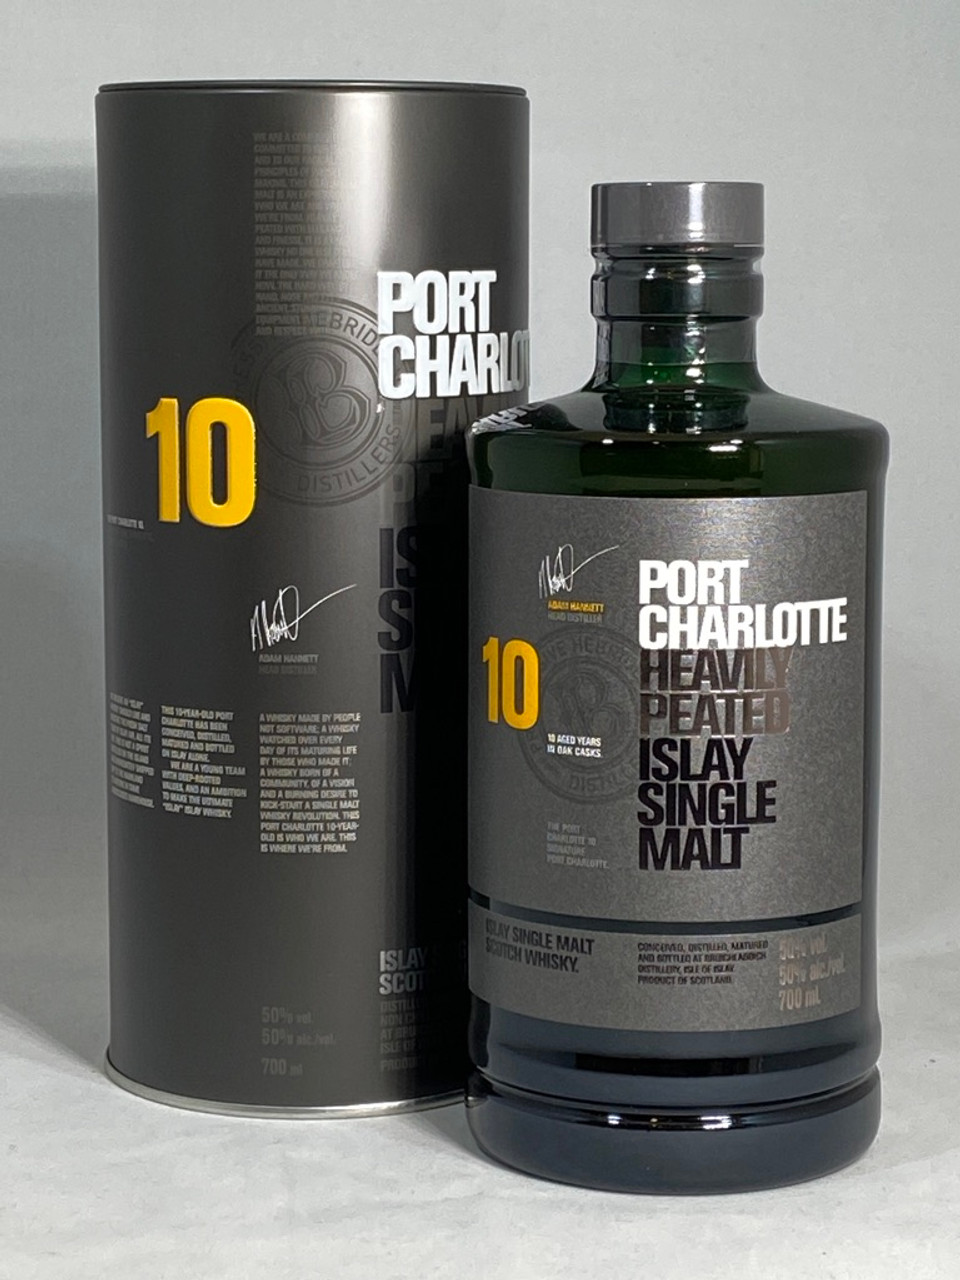 Port Charlotte 10yr Single Malt Scotch